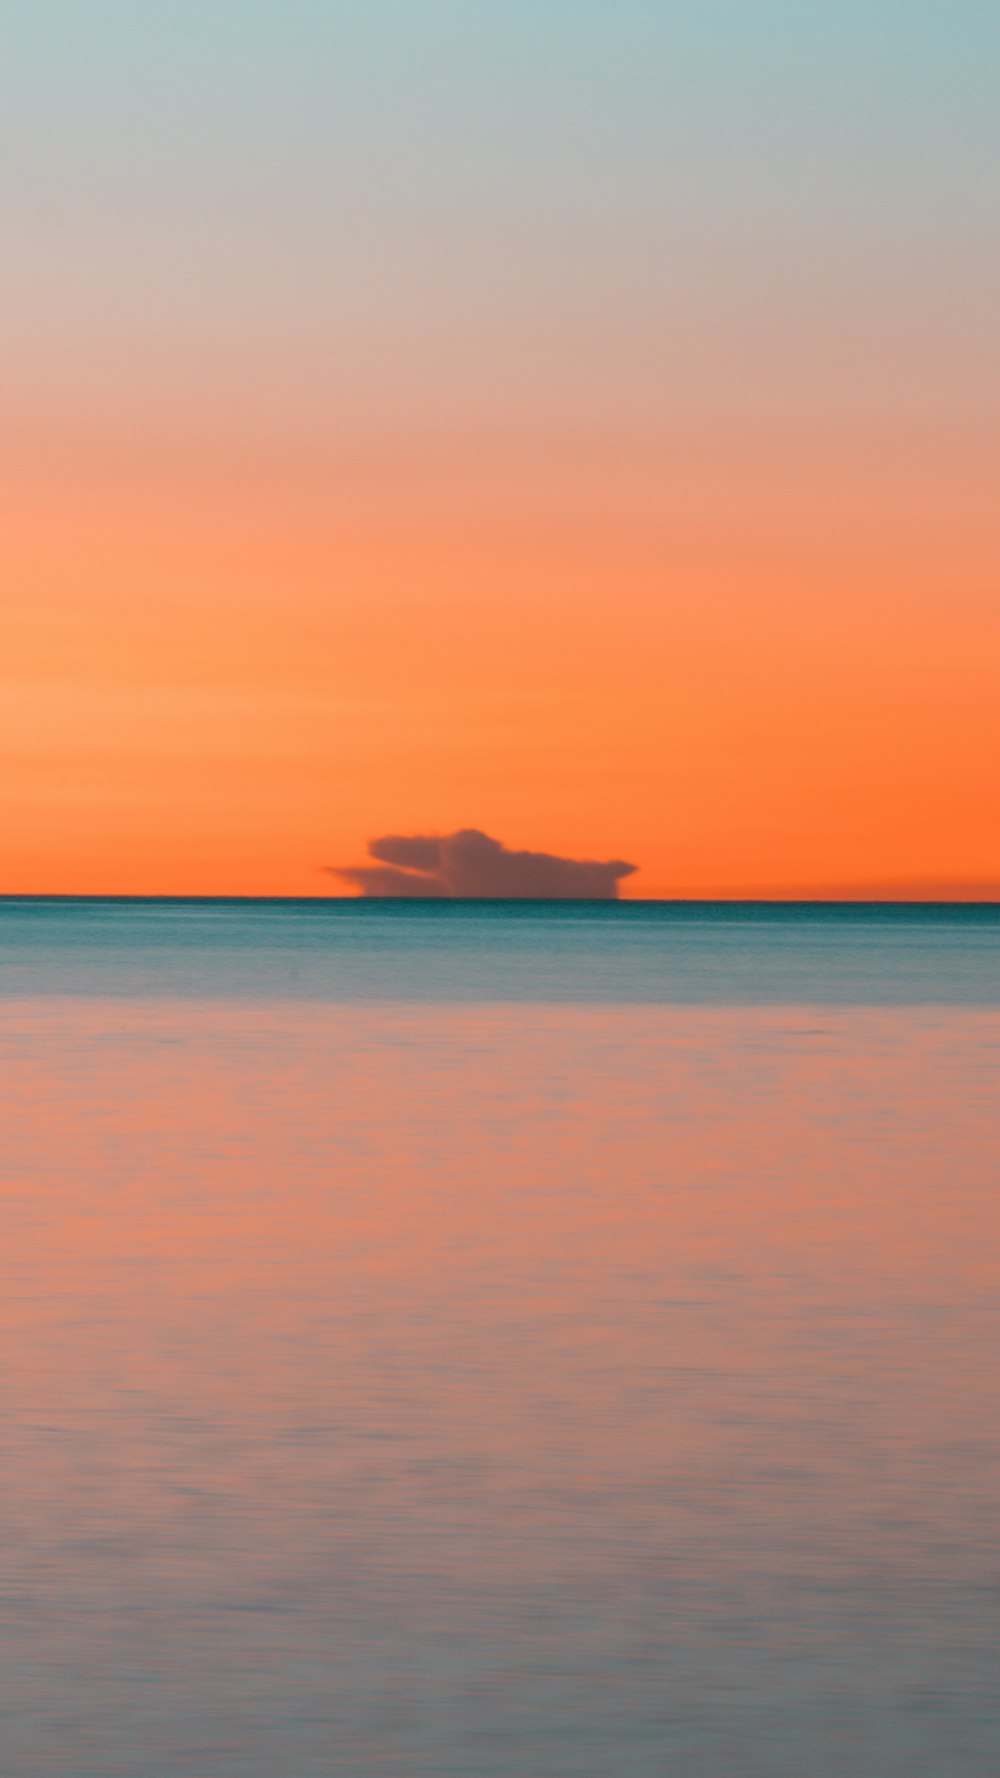 body of water across horizon during sunset